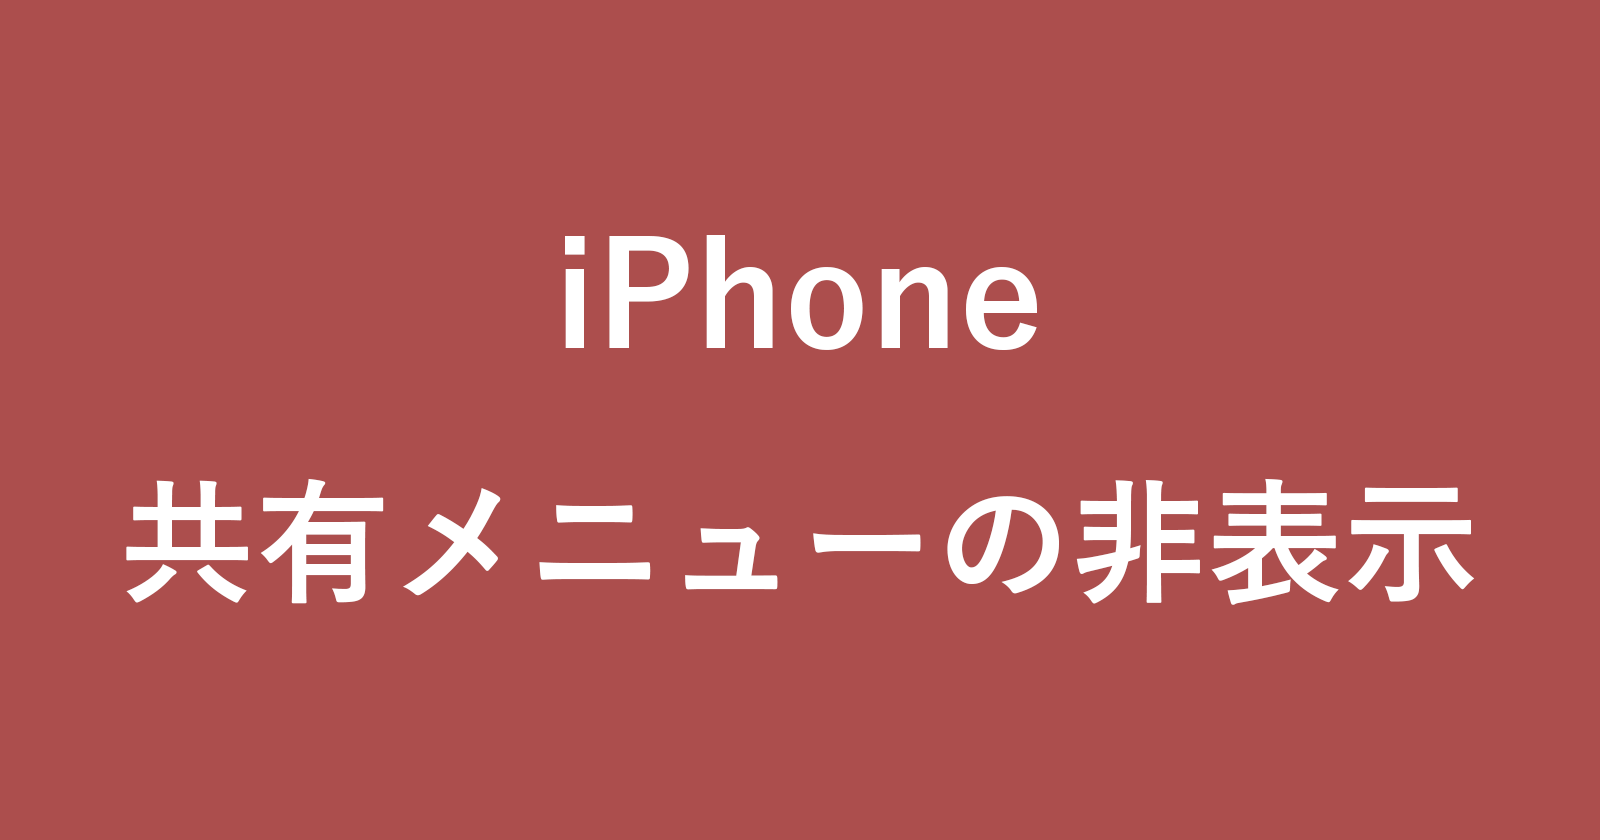 iphone disable sharing menu